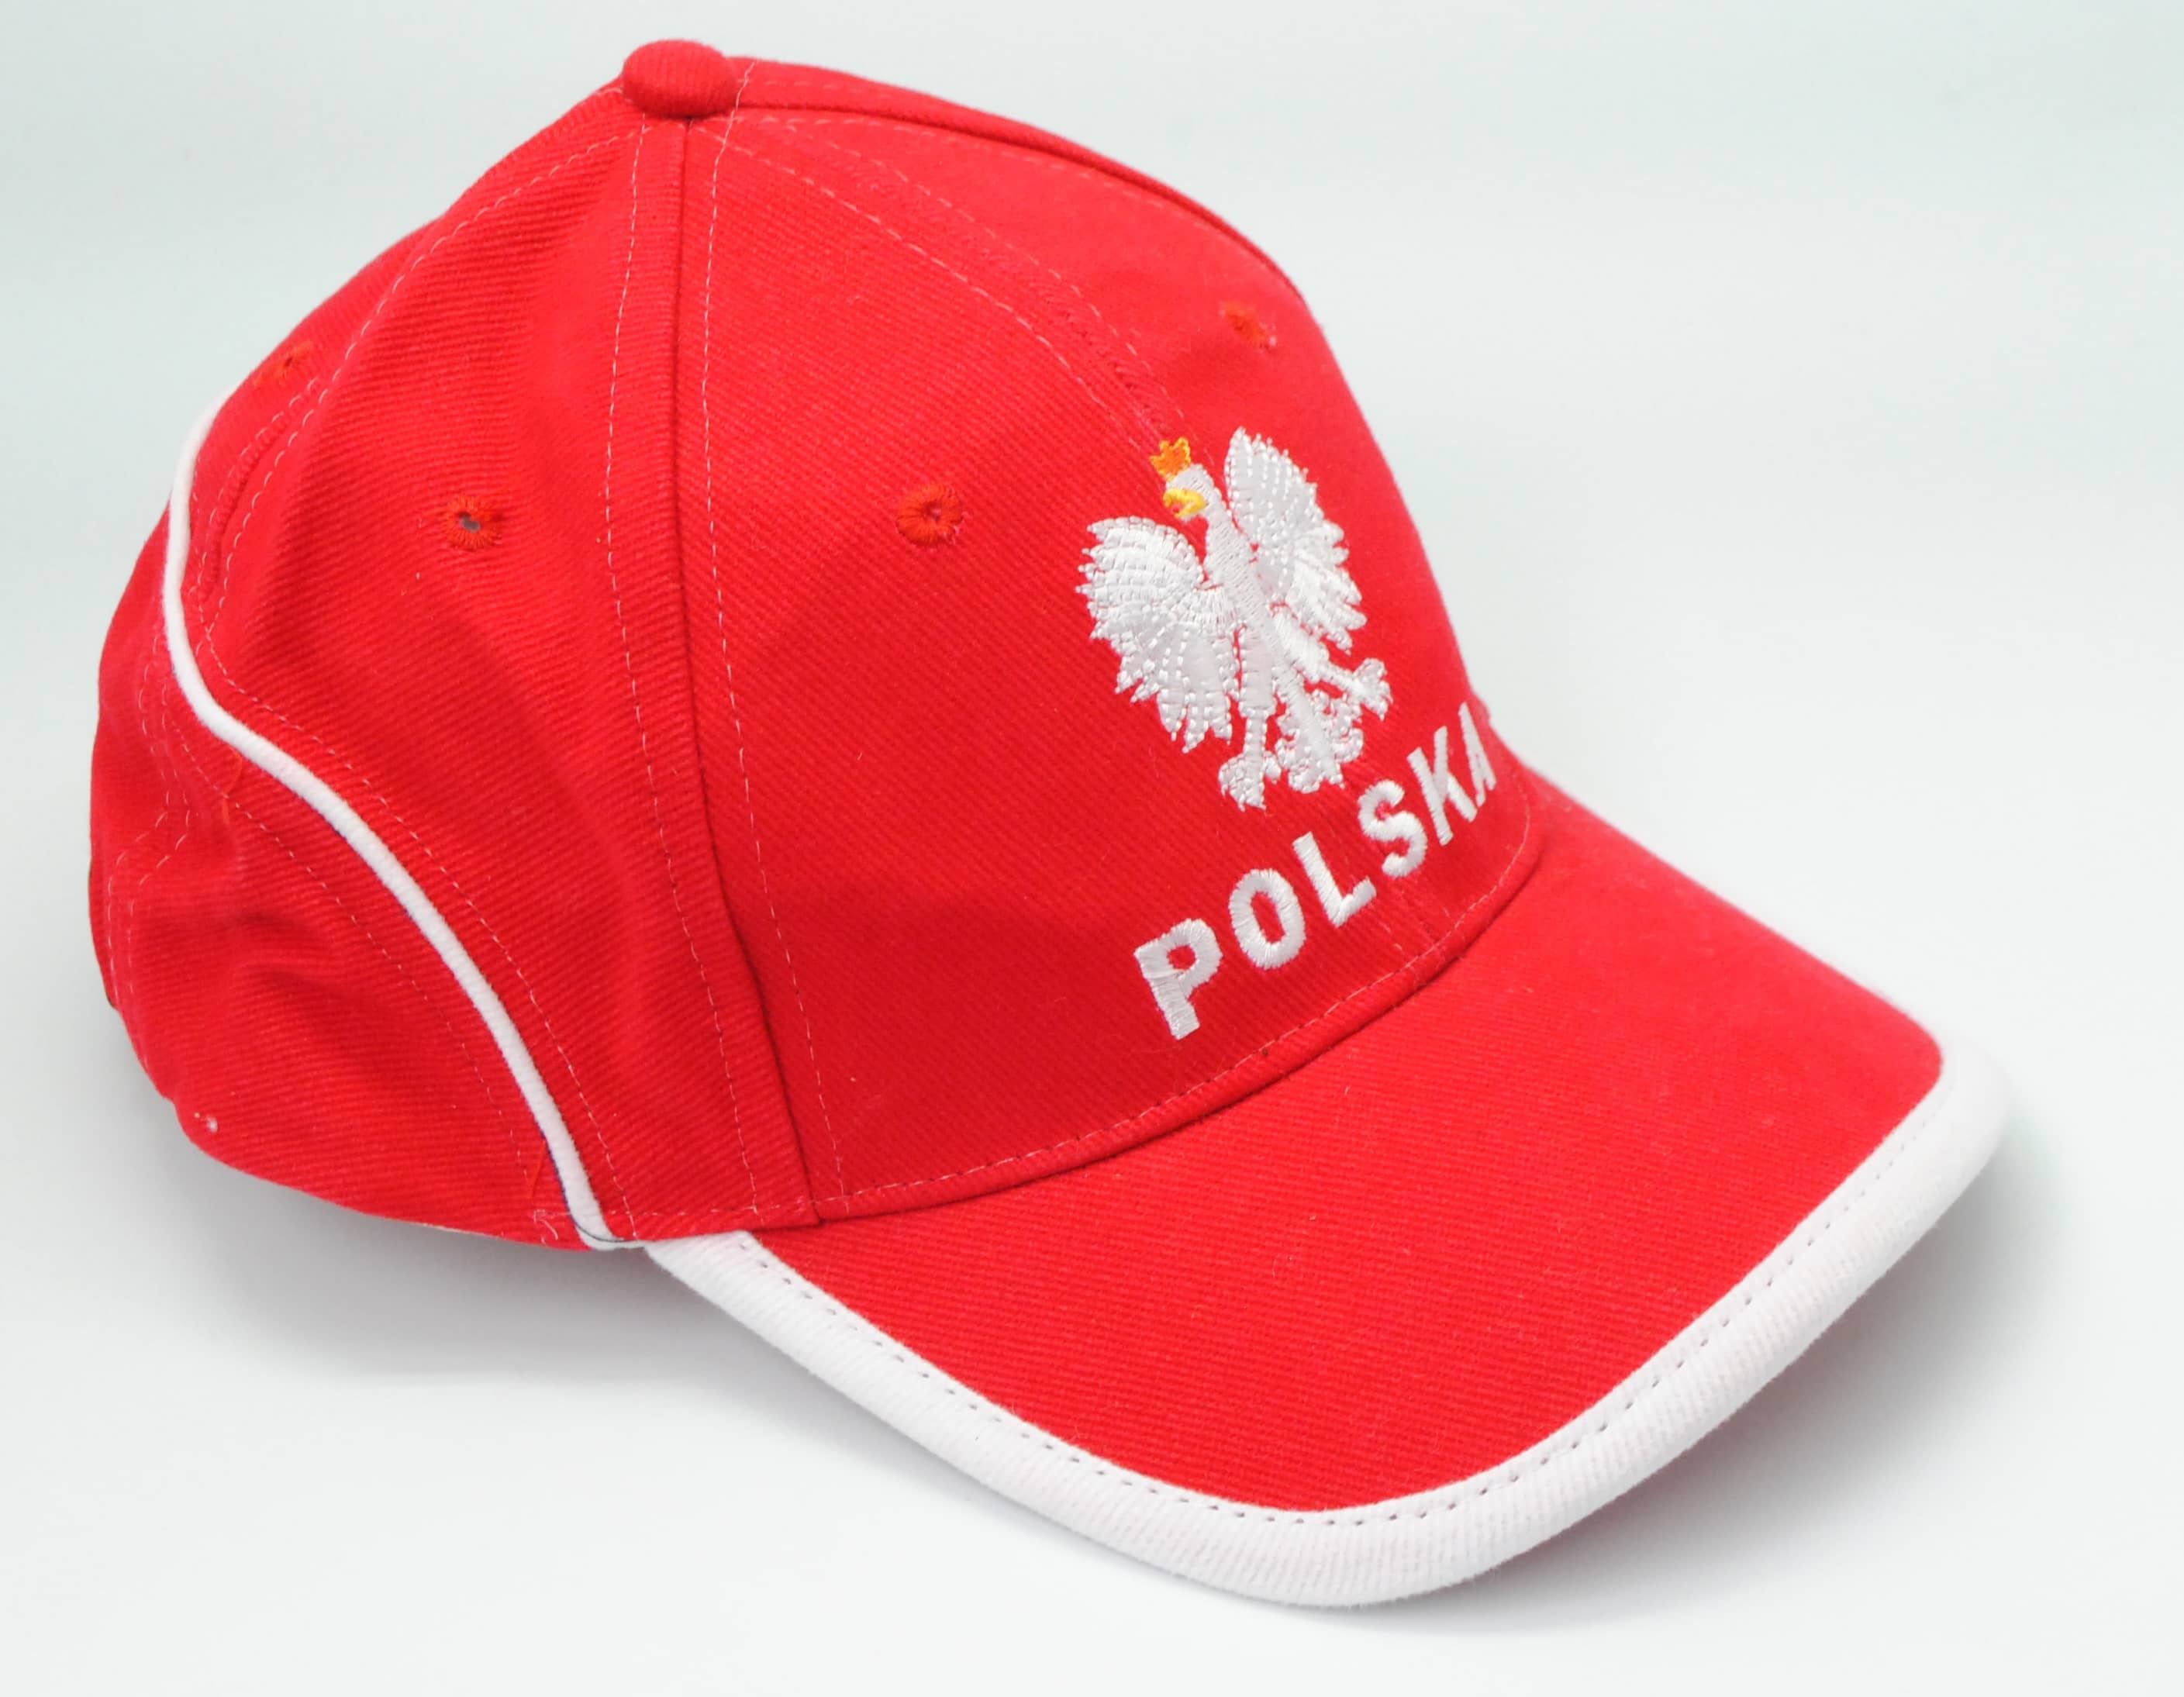 Cap Polen mit Adler